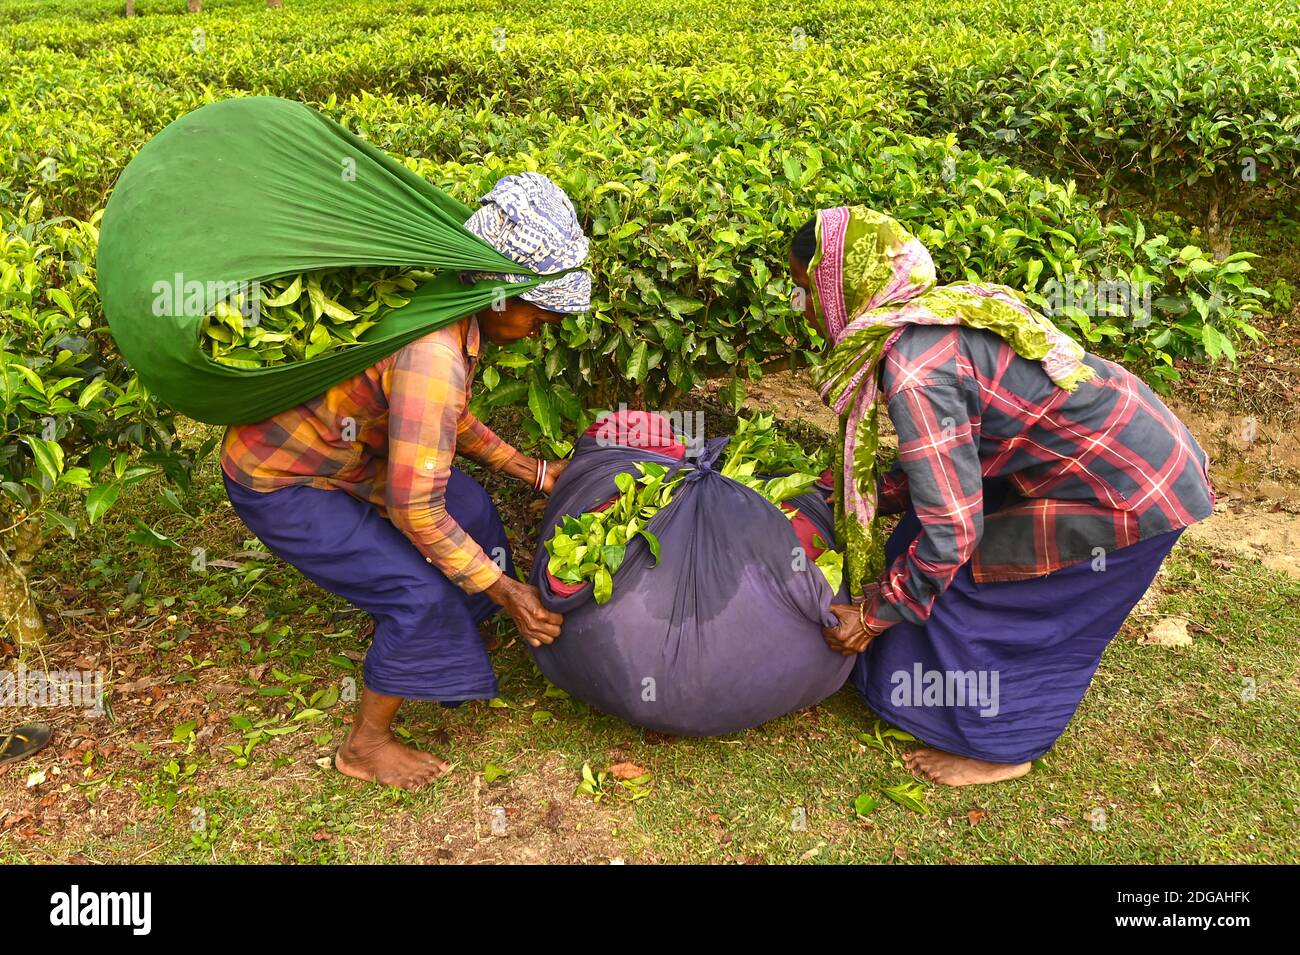 (201208) -- SREEMANGAL, Dec. 8, 2020 (Xinhua) -- Women carry tea leaves at a garden in Sreemangal, Bangladesh, Dec. 7, 2020. (Xinhua) Stock Photo